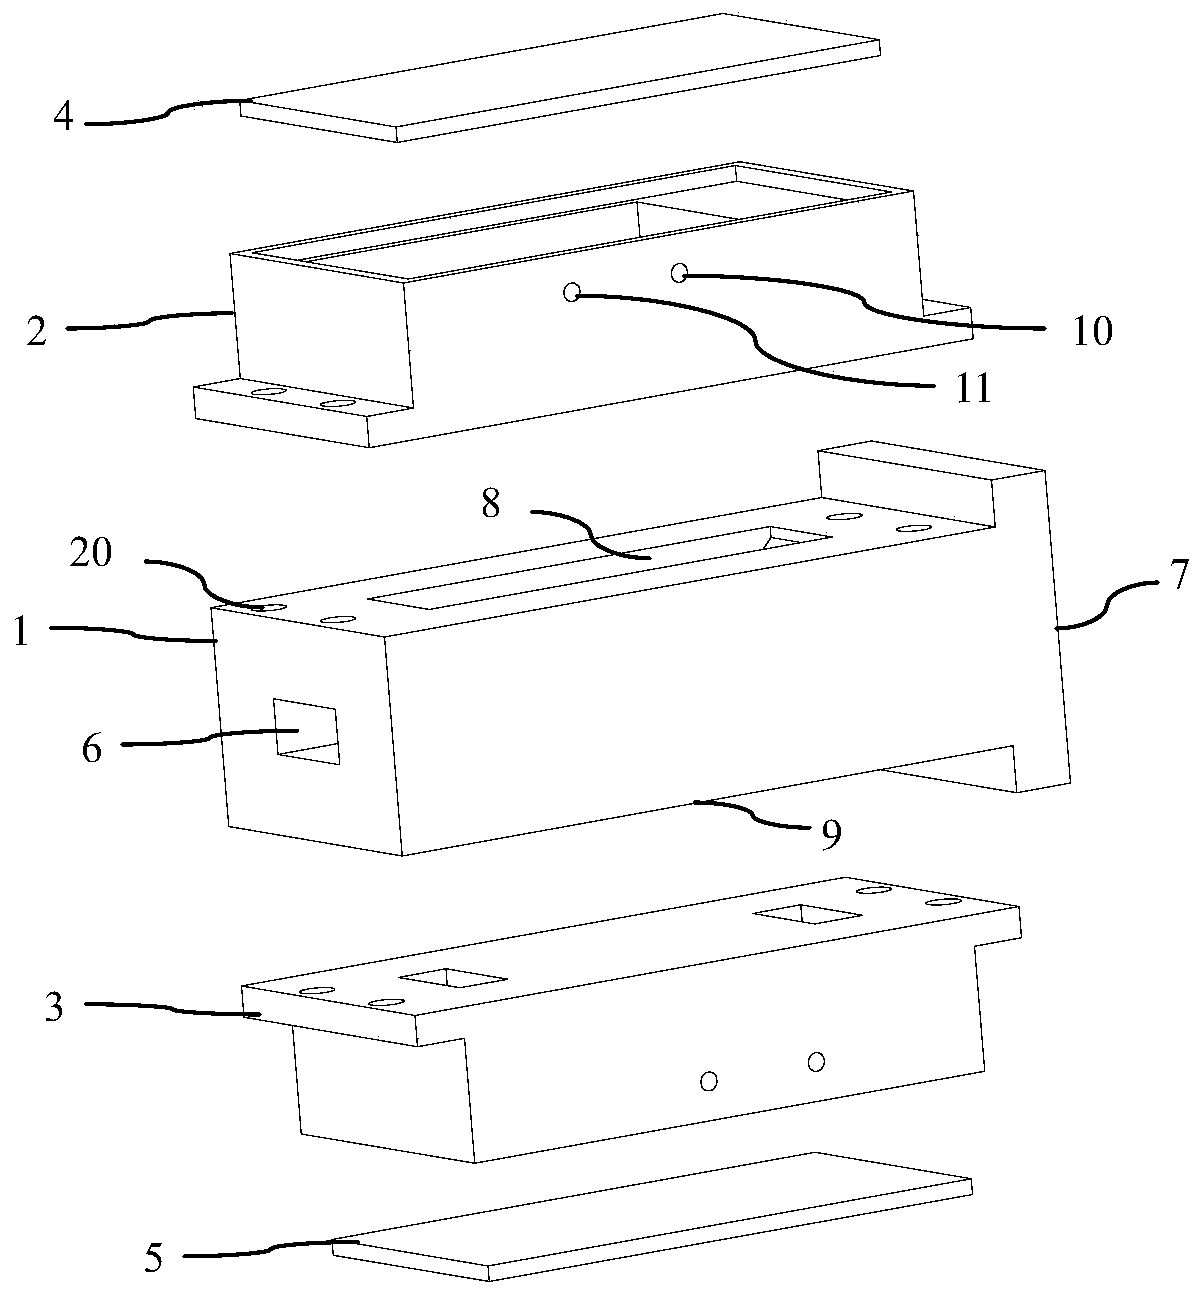 Bidirectional coupling detector and method based on rectangular waveguide